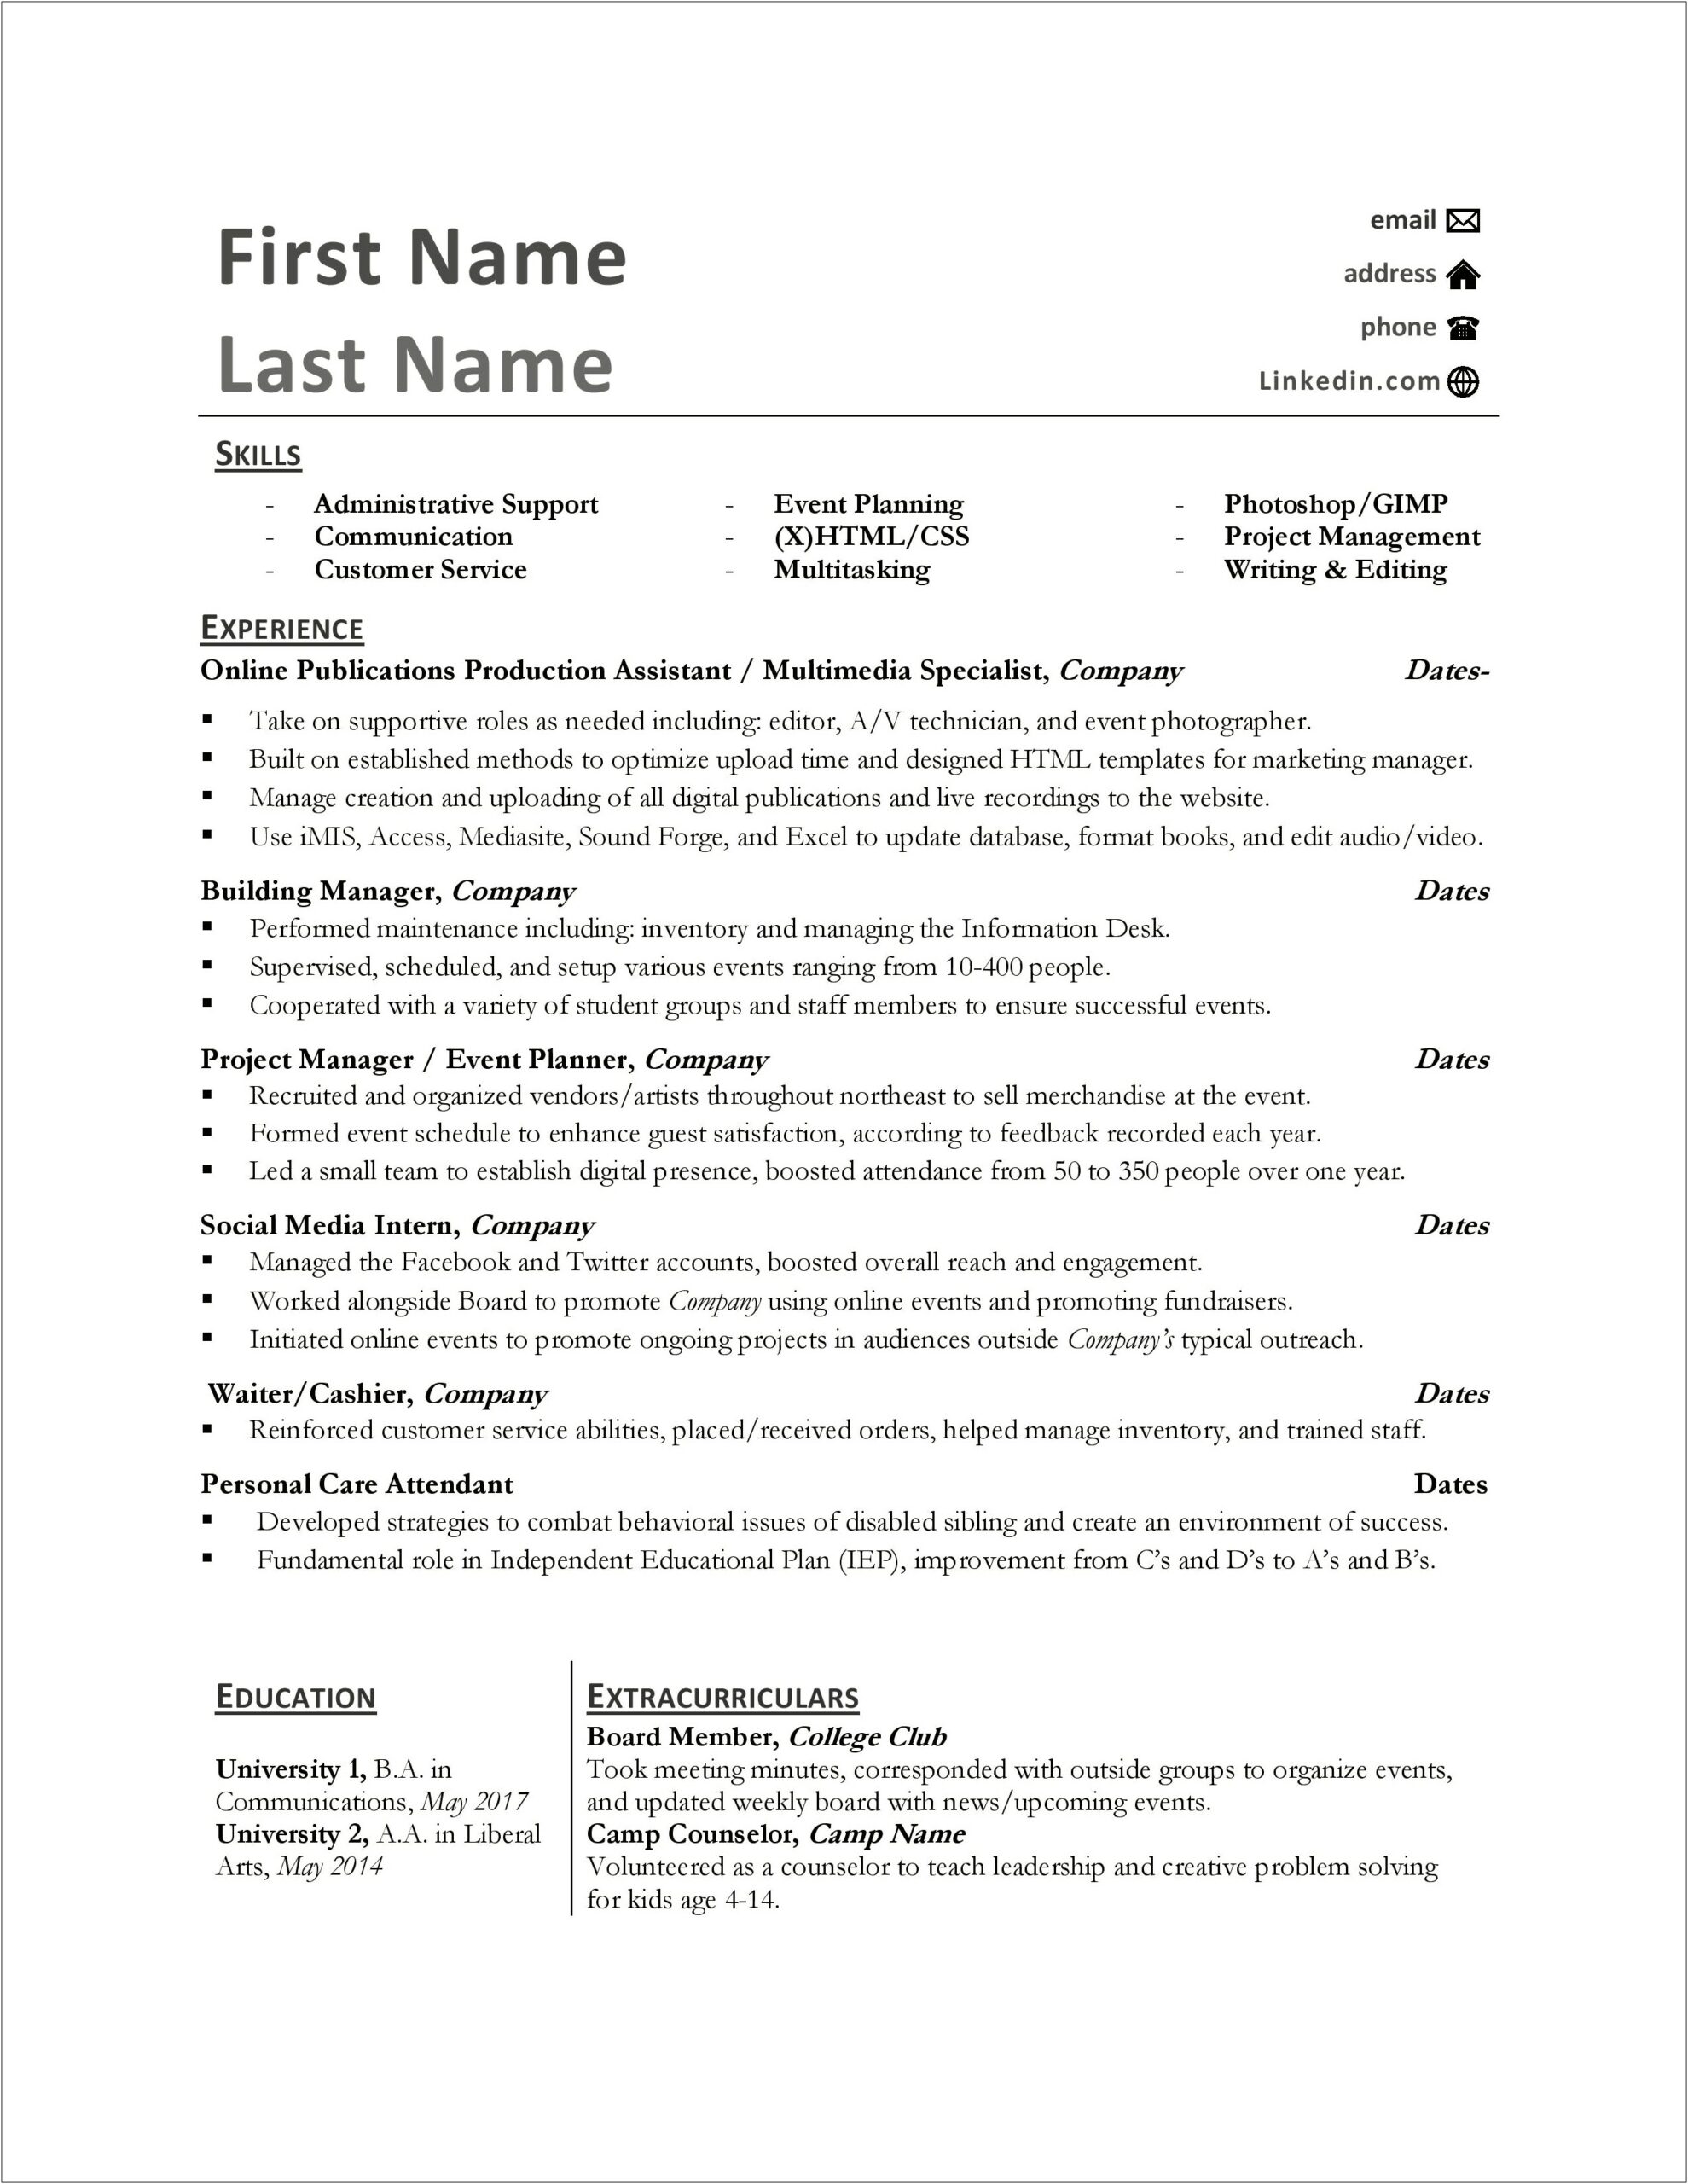 Same Job Title Different Responsibilities Resume